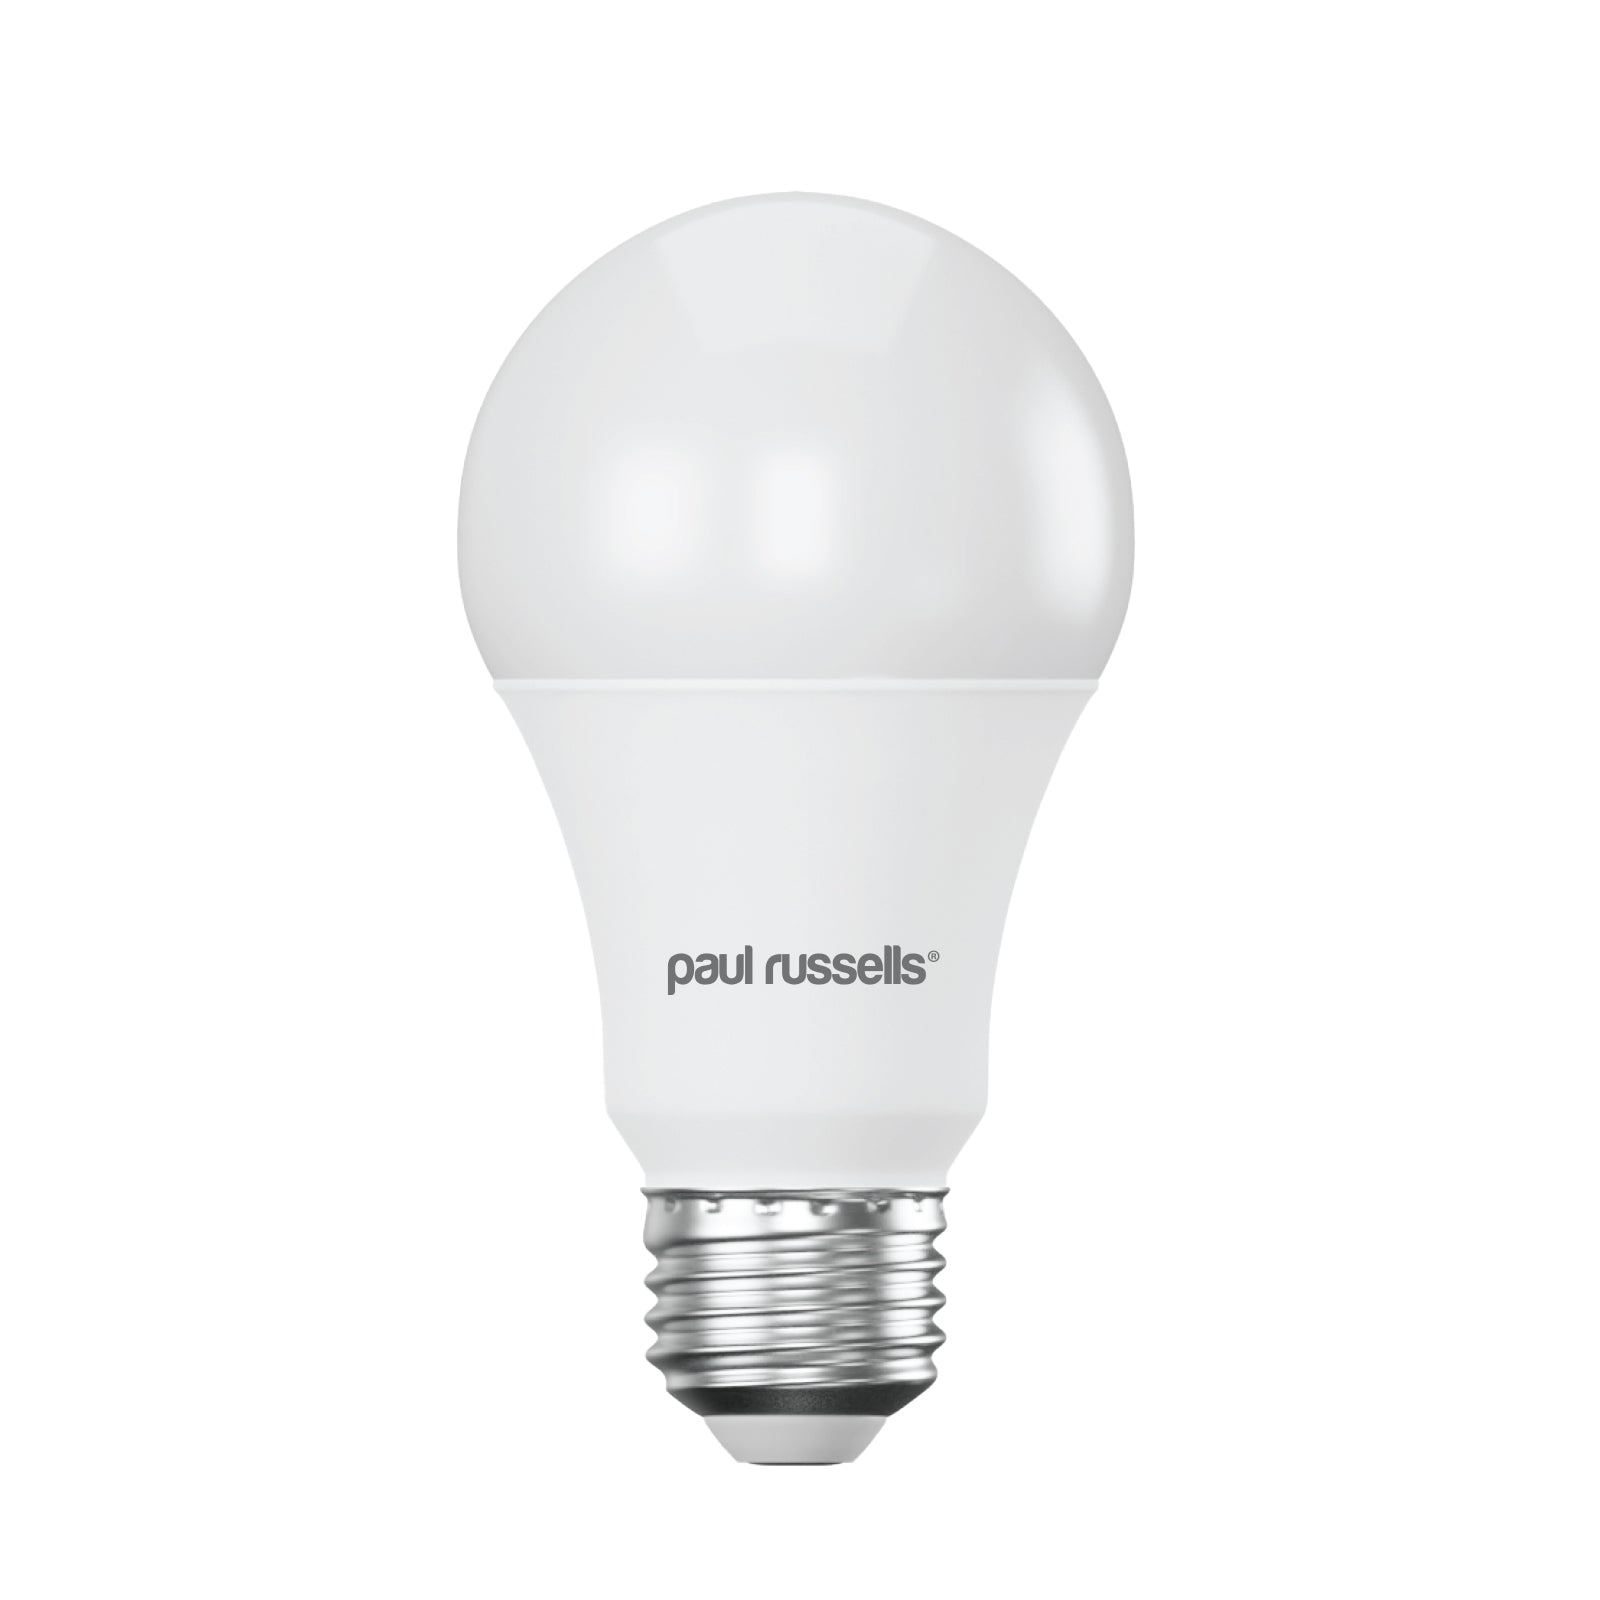 LED GLS 11W=75W Warm White Edison Screw ES E27 Light Bulbs